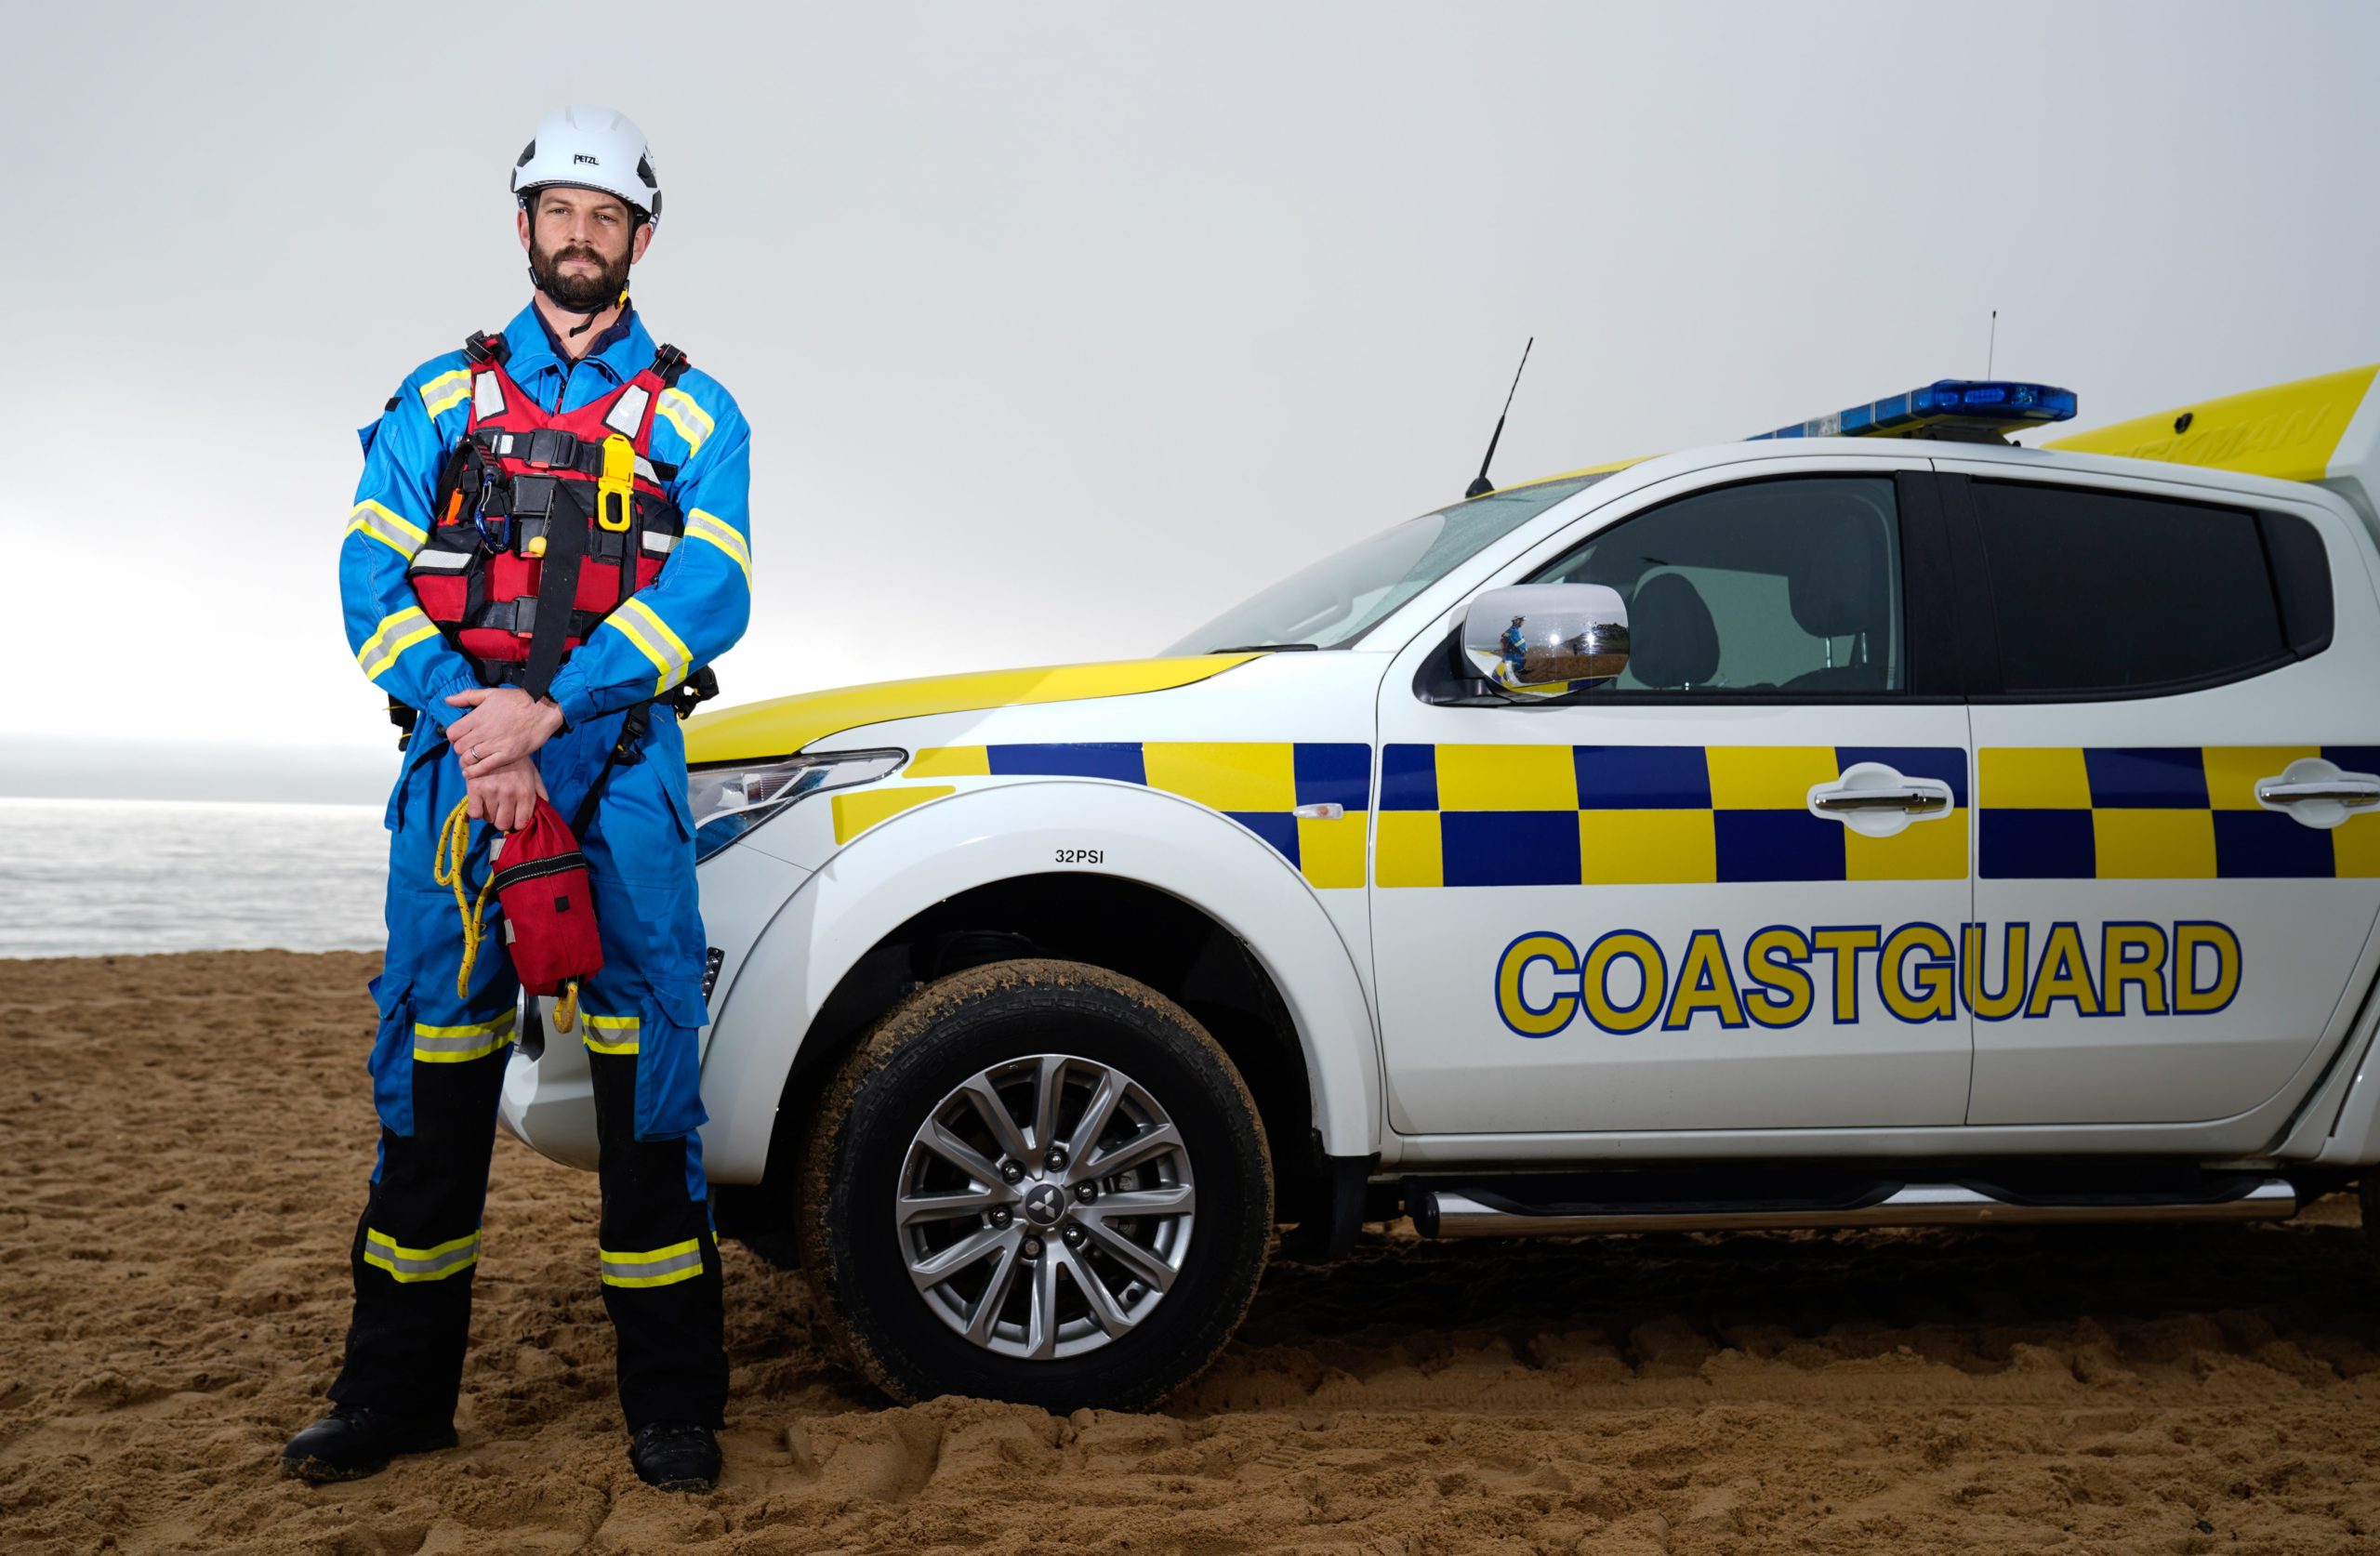 Coastguard celebrates 200 years of saving lives at sea